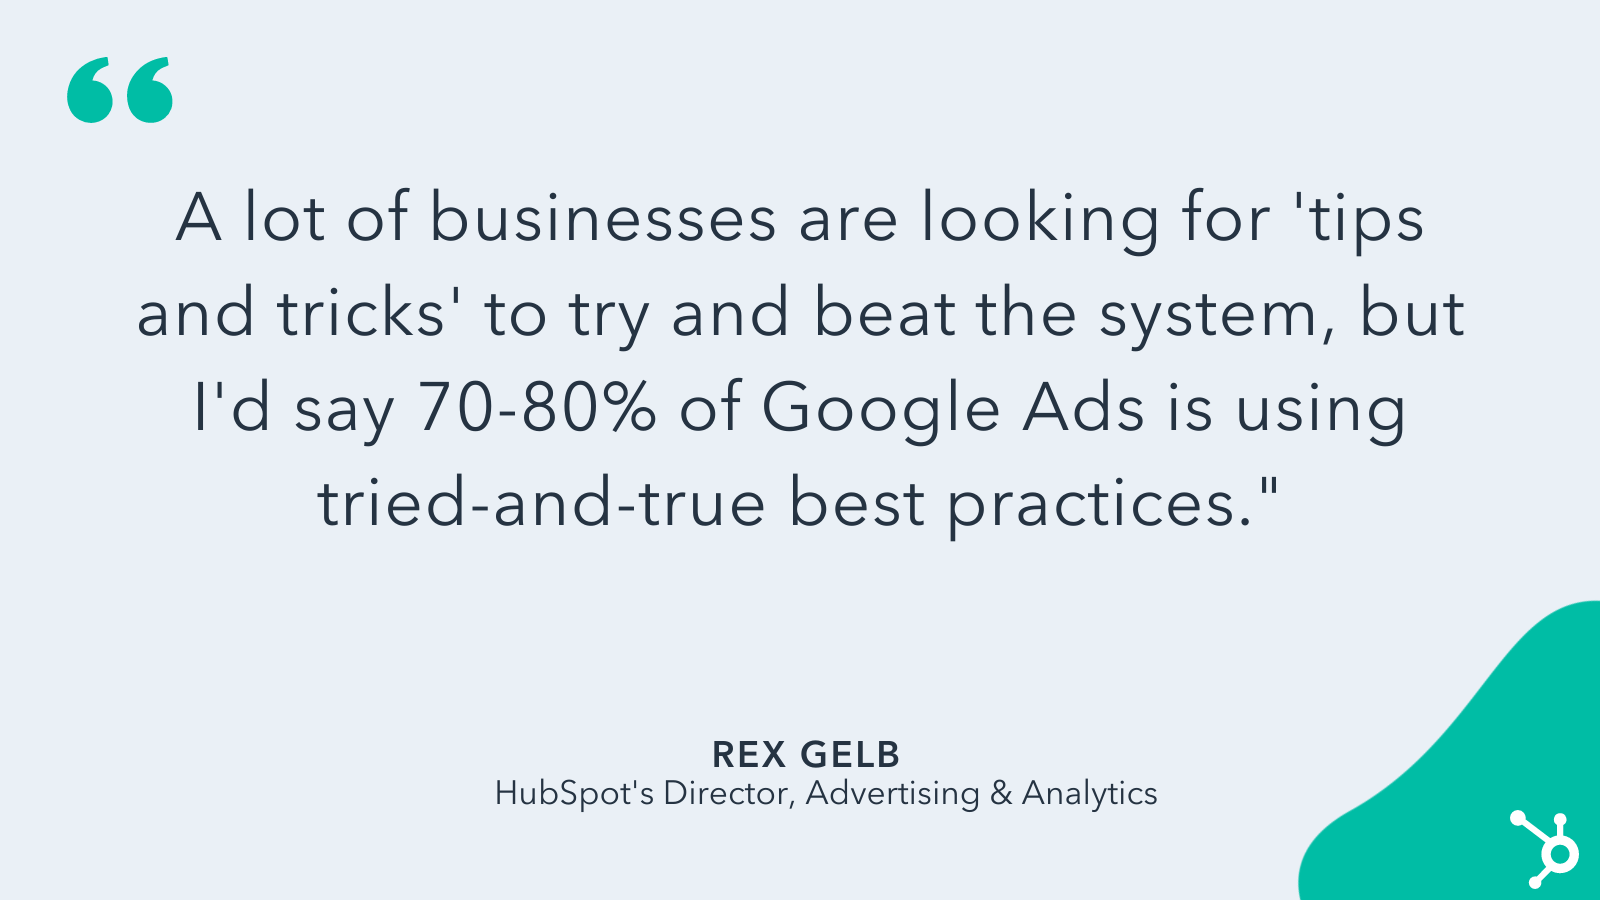 rex gelb on Google Small Business Advertising Strategies